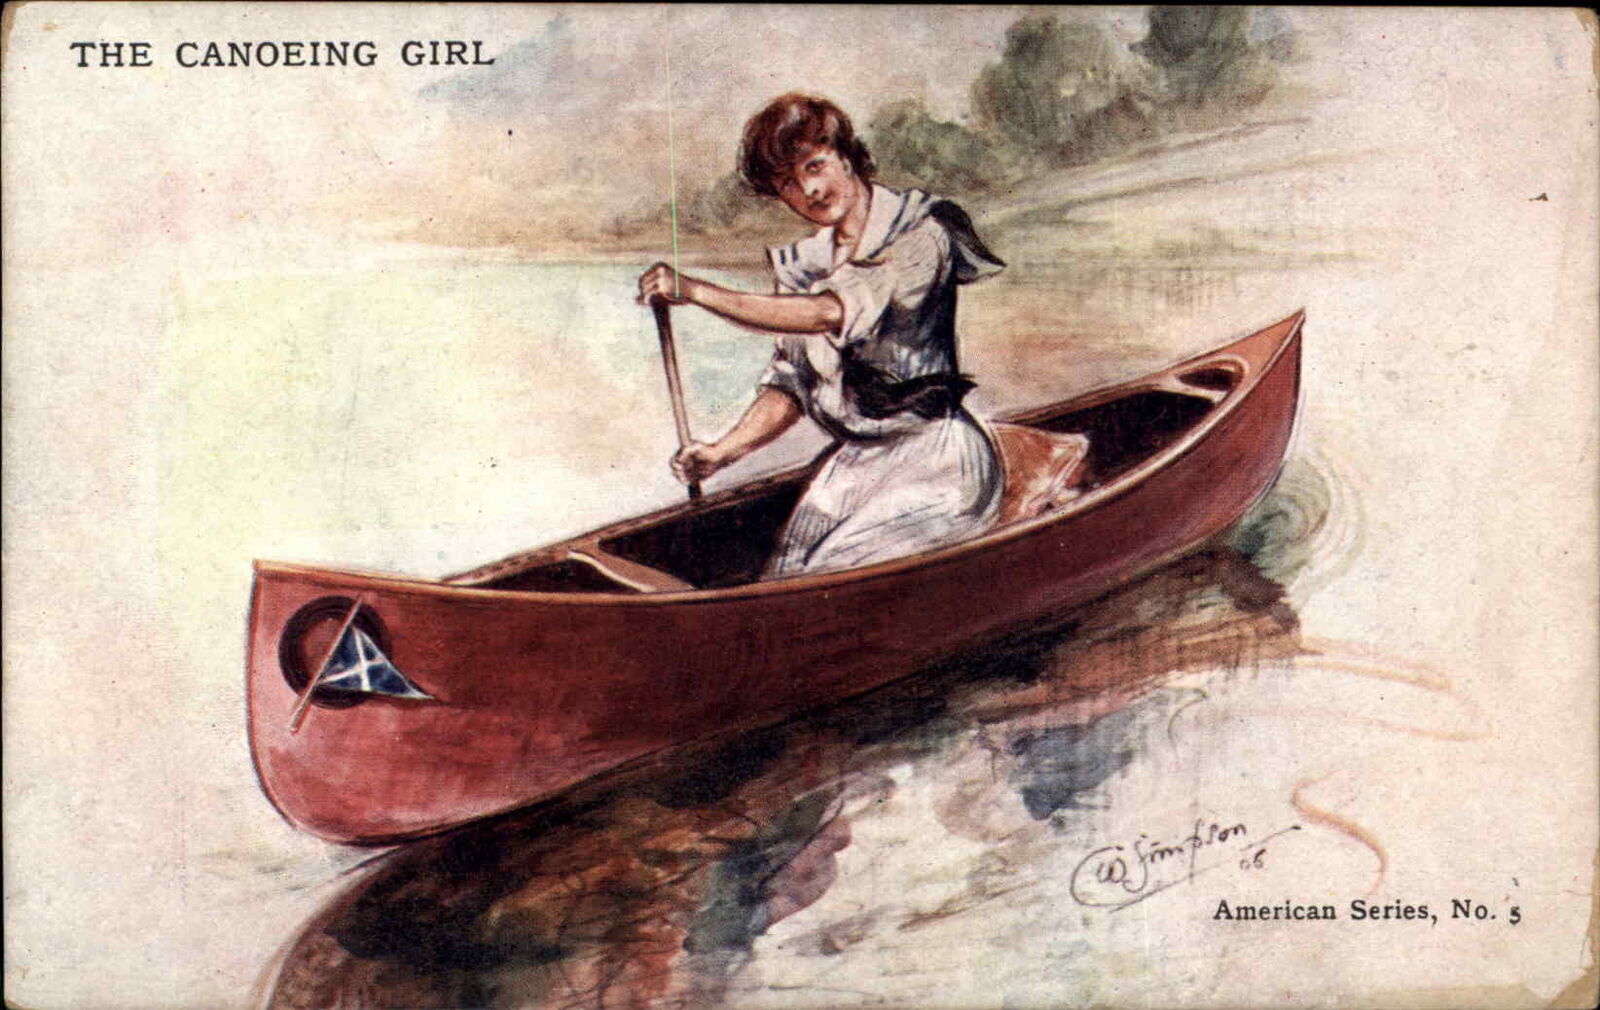 Canoeing Girl American Series No 5 Beautiful Woman Wooden Canoe c1905 Postcard